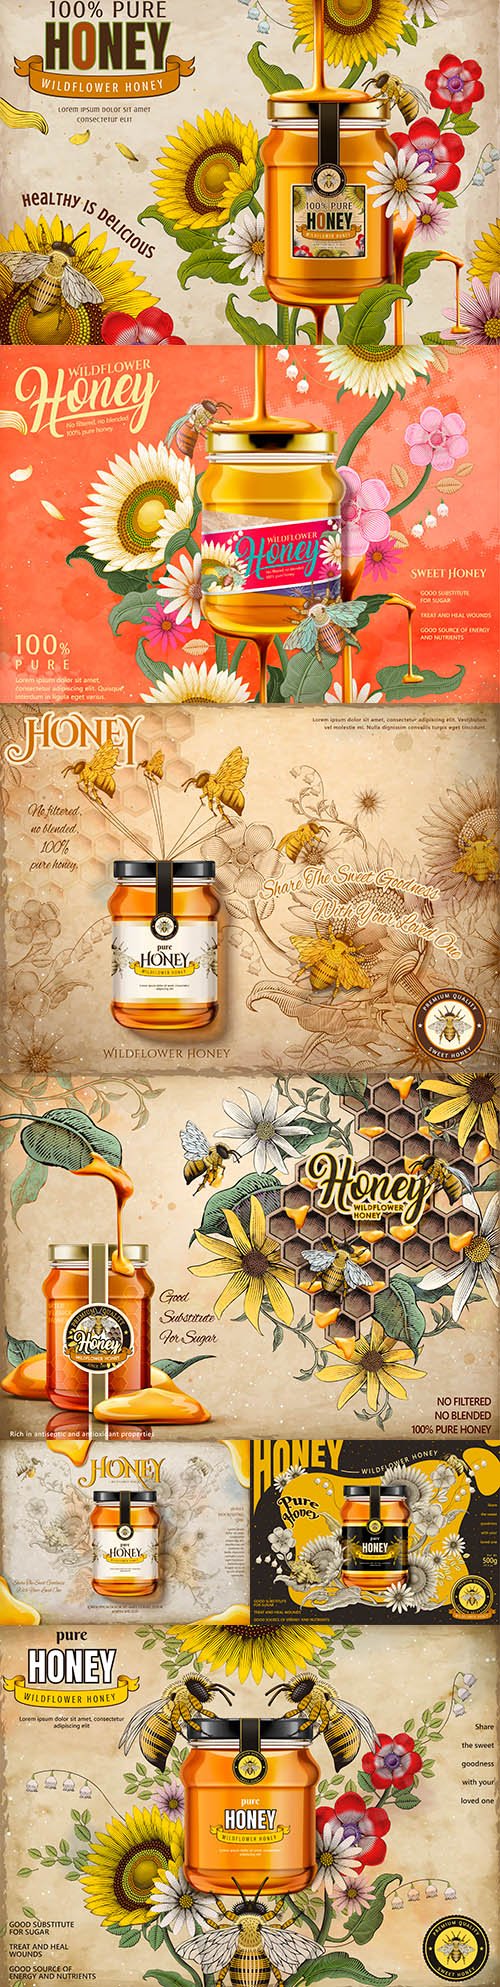 Advertising tasty honey from field flowers in glass jar illustration